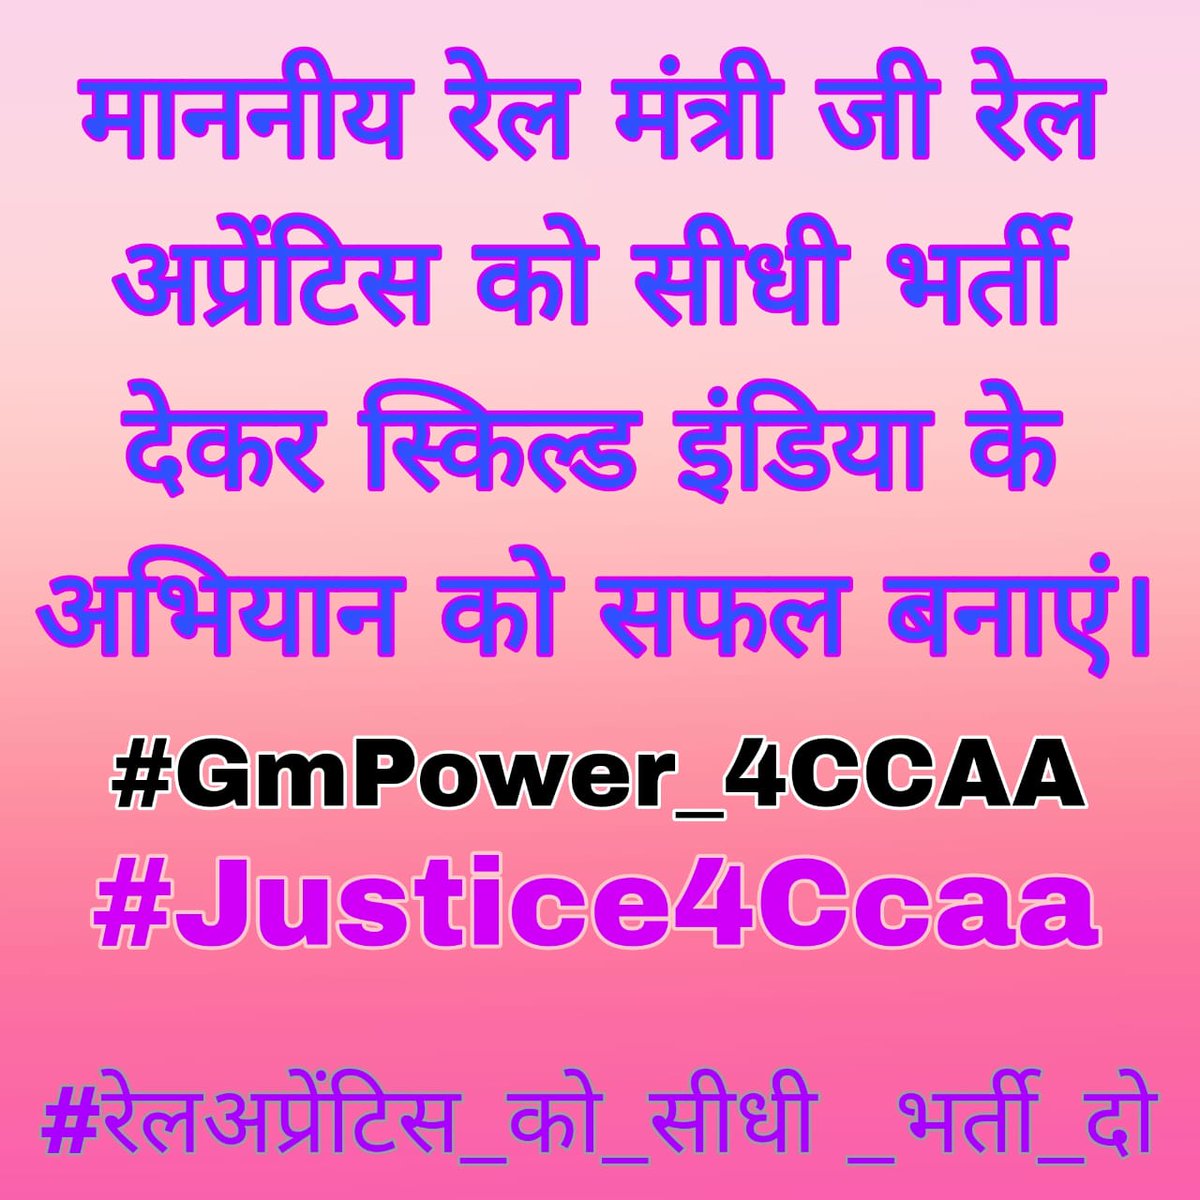 #GiveDirectJob4Ccaa 
झूठ की रफ्तार चाहे कितनी भी तेज हो लेकिन मंजिल तक केवल सच ही जाता है।
@AshwiniVaishnaw
@annamalai_k
@BJP4India
@DeshkiawazINC 
#रेलअप्रेंटिस_को_सीधी_भर्ती_दो 
#GmPower_4CCAA 
@RailMinIndia 
@RahulGandhi @BJP4India @DoPTGoI @AmitShah @annamalai_k